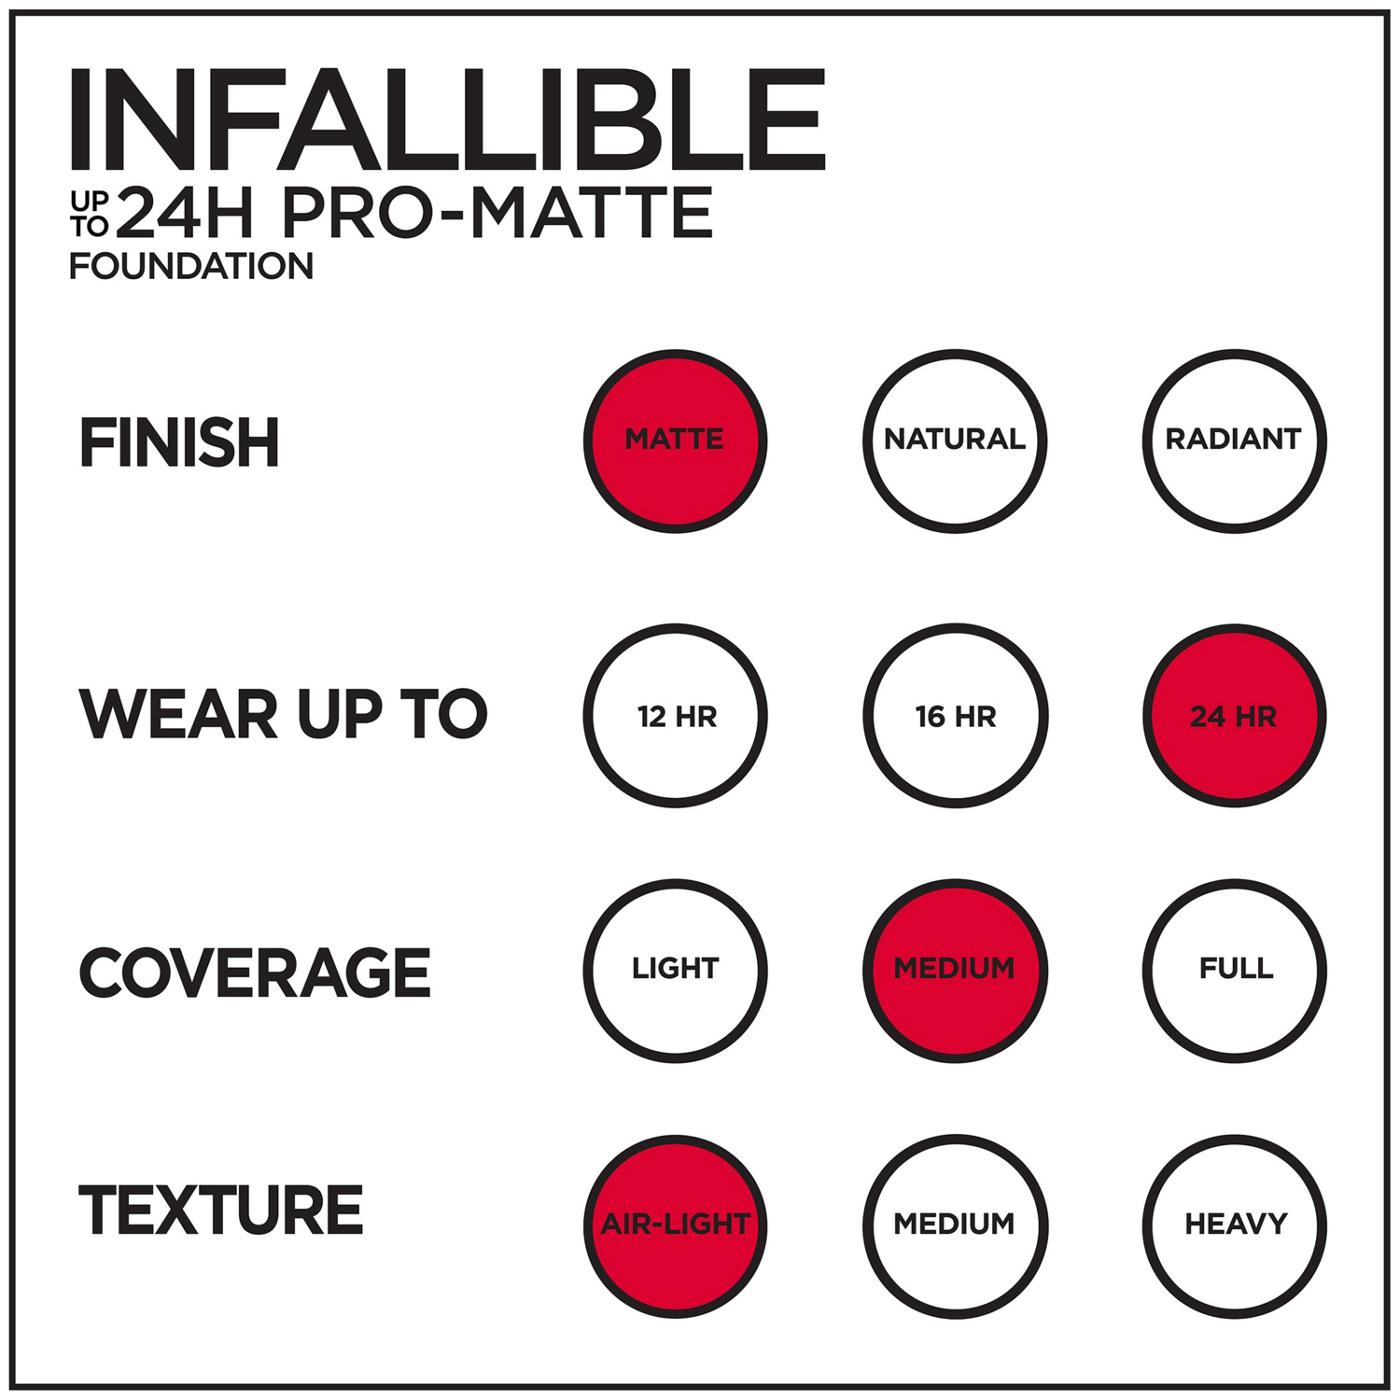 L'Oréal Paris Infallible Infallible Pro-Matte Foundation, Up To 24 HR Matte Finish 105 Natural Beige; image 3 of 5